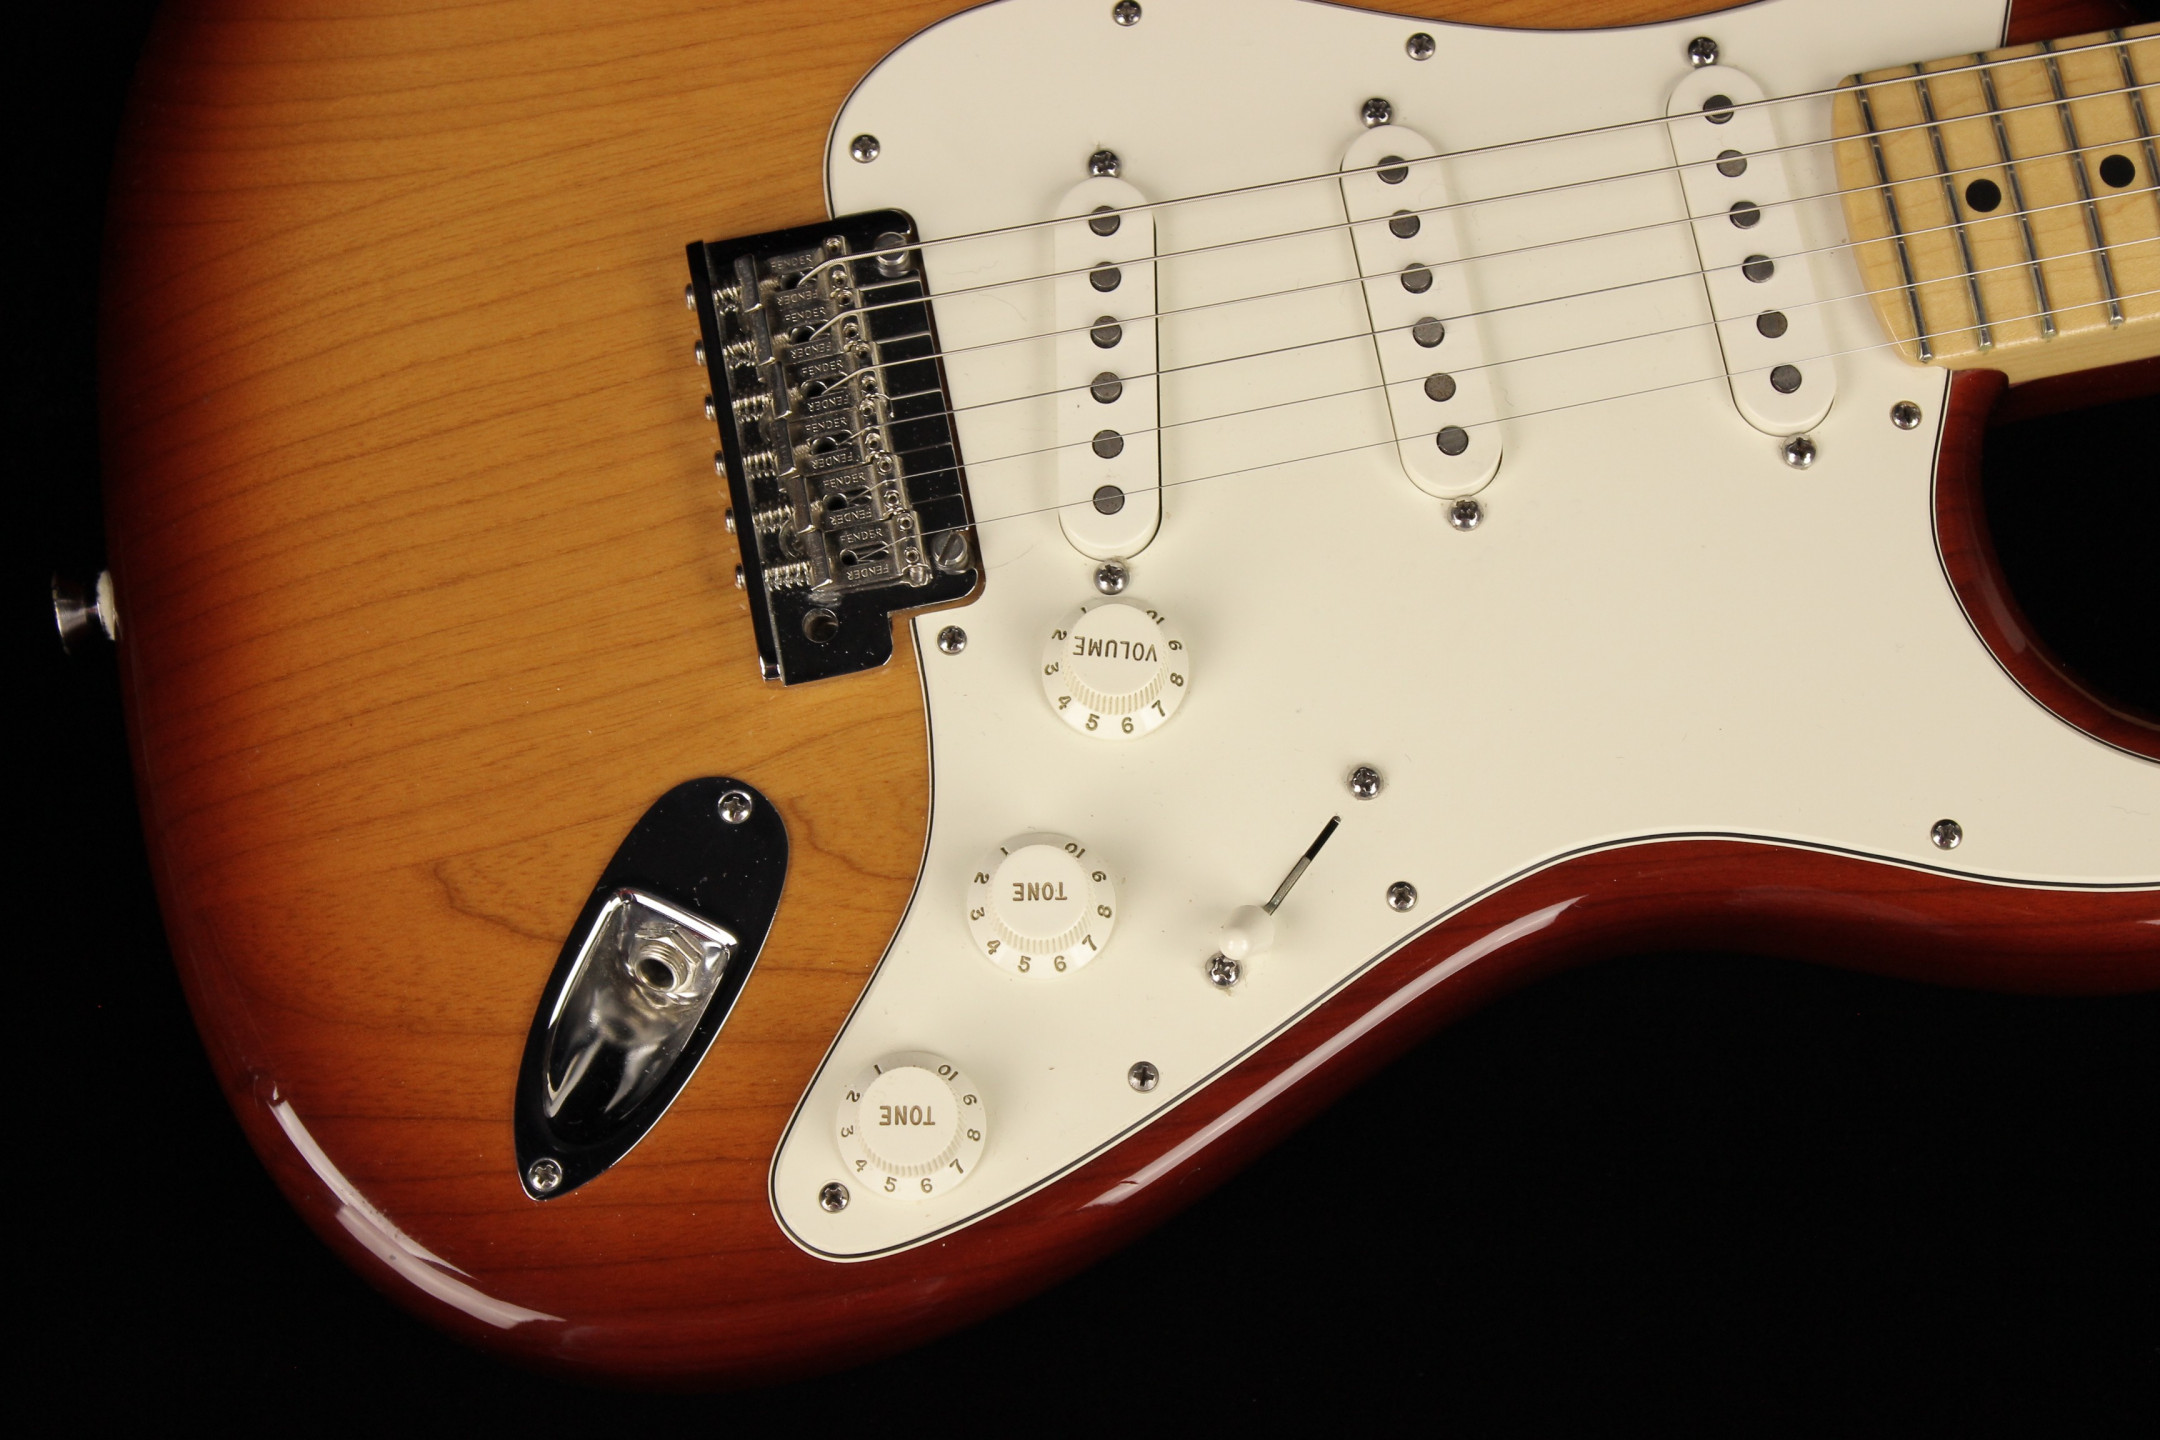 Fender American Standard Stratocaster Sienna Sunburst (SN 